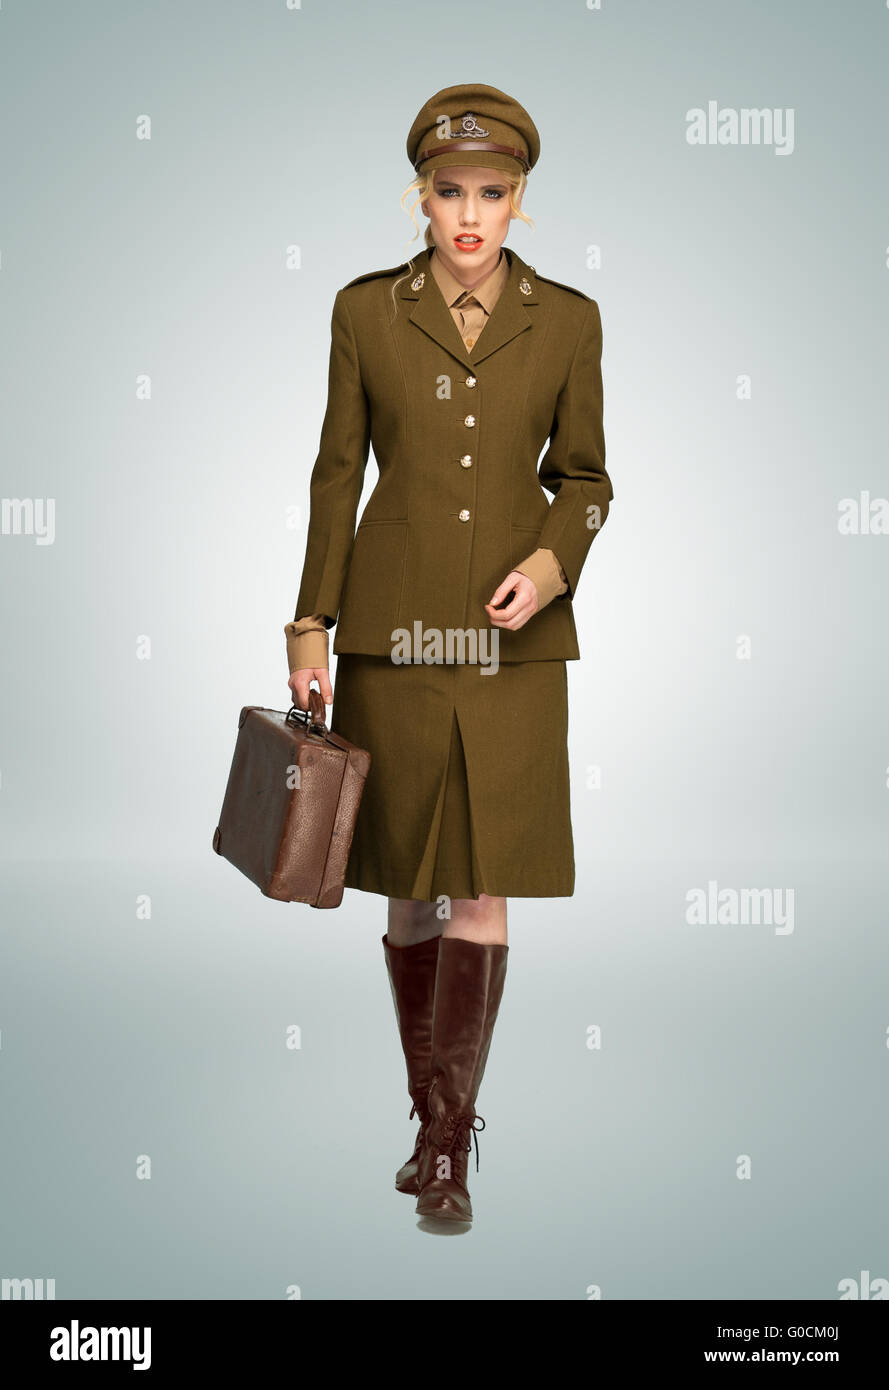 Glamorous woman in military uniform Stock Photo - Alamy